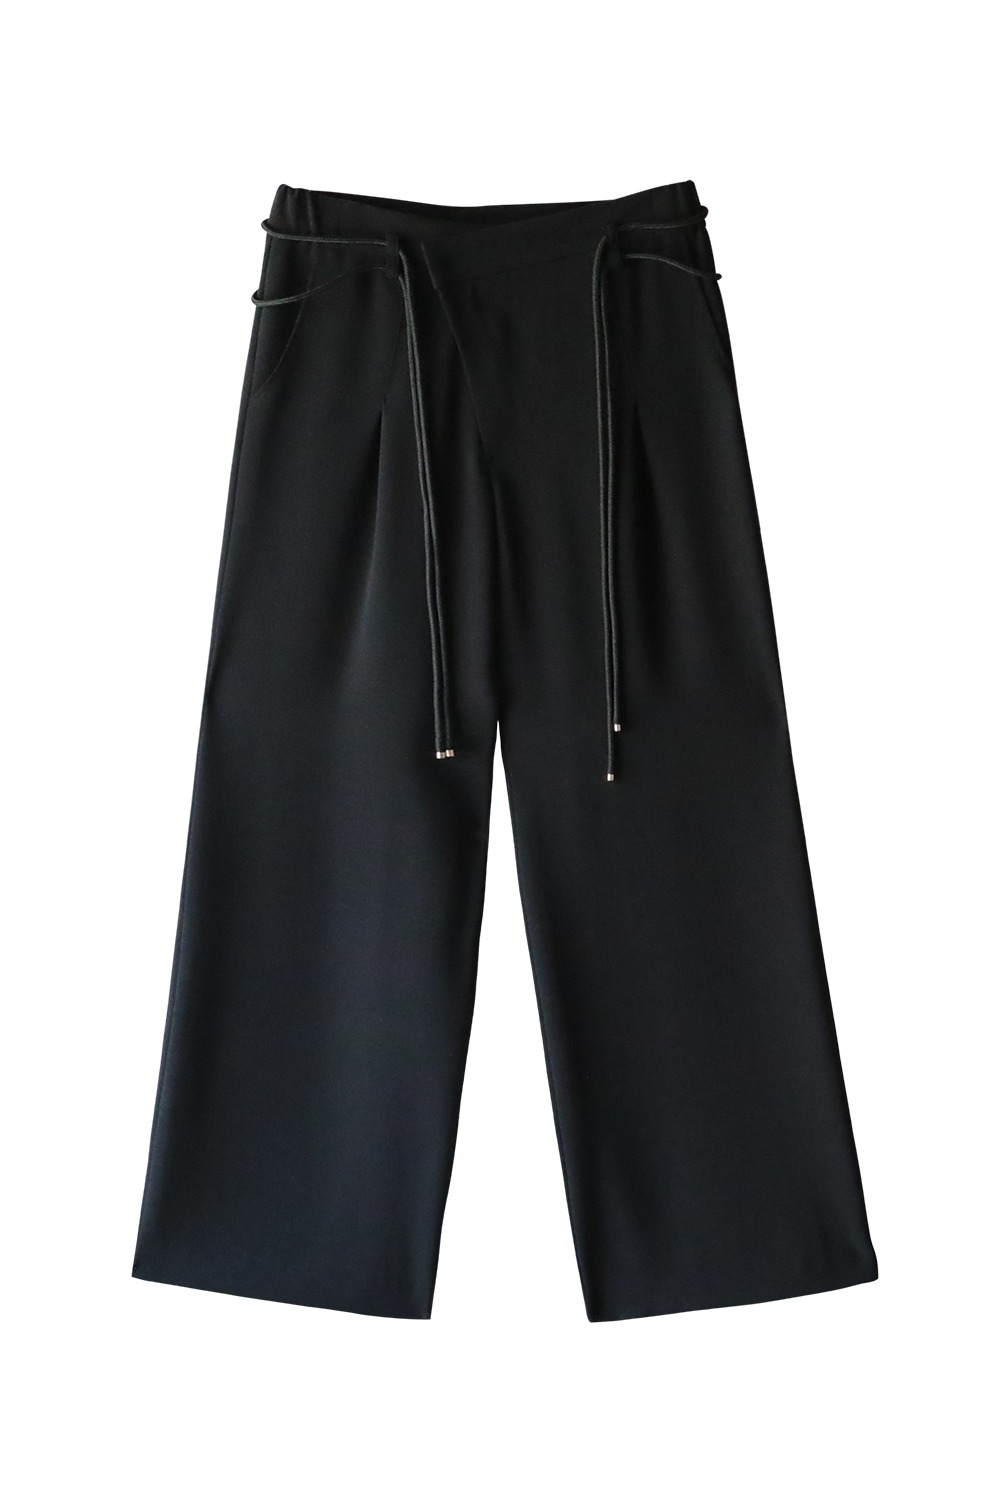 Adjustable DAEGUGO Pants [Black]